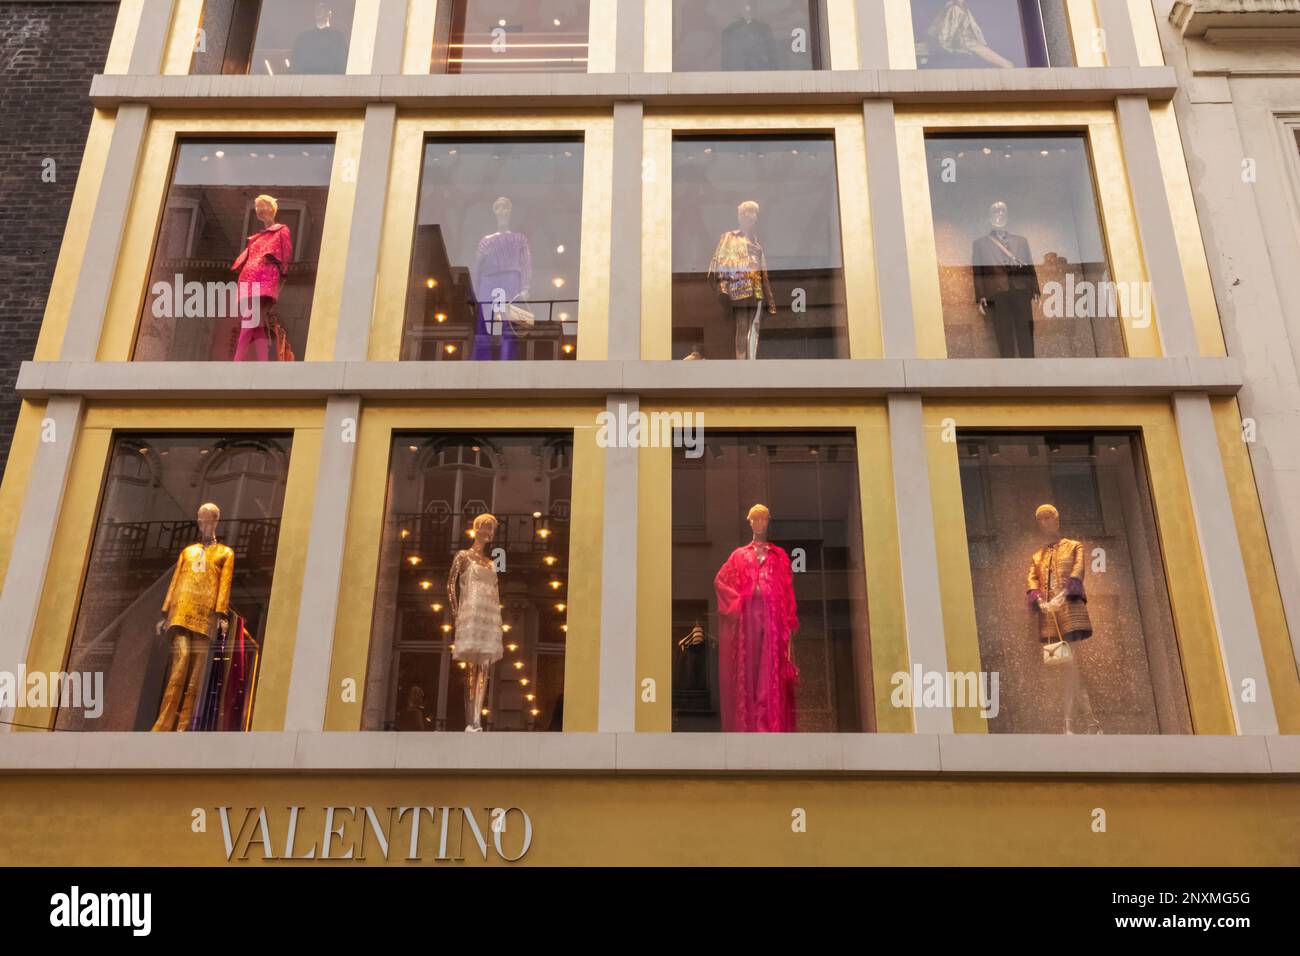 Angleterre, Londres, Piccadilly, New Bond Street, façade extérieure vue sur le magasin Valentino Banque D'Images